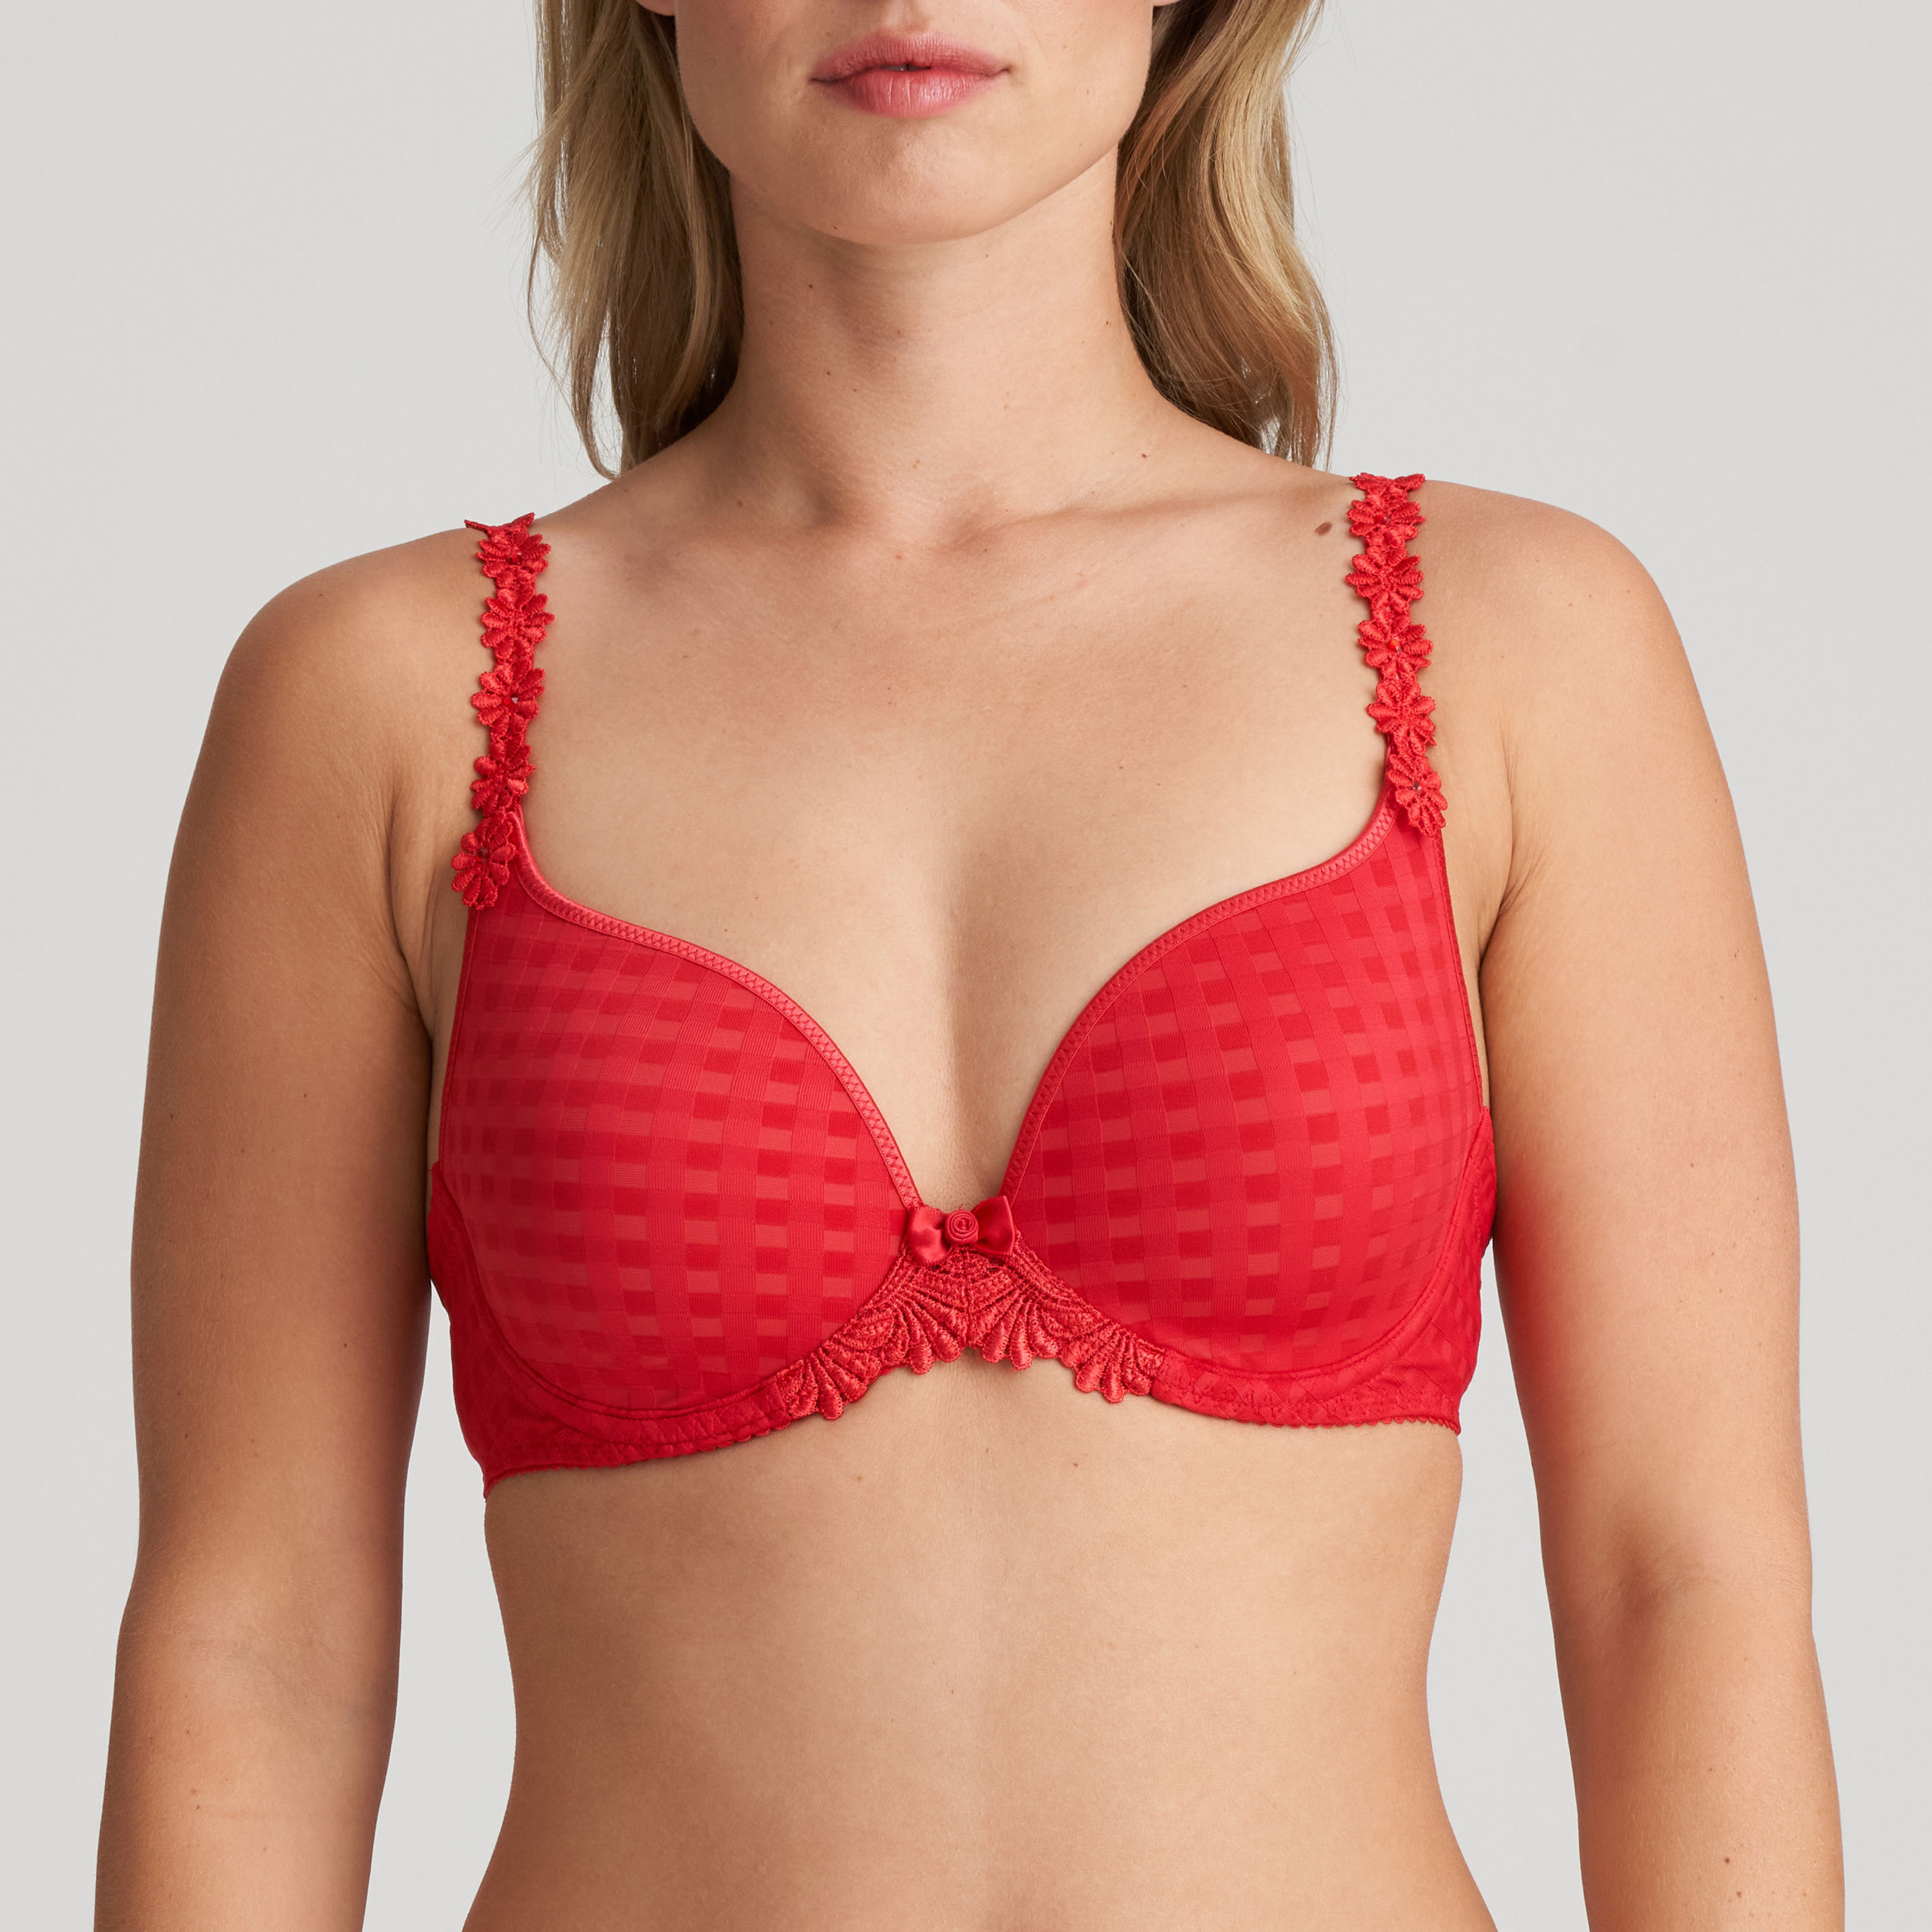 New Bra Size 38 C Red - $22 - From Josephine